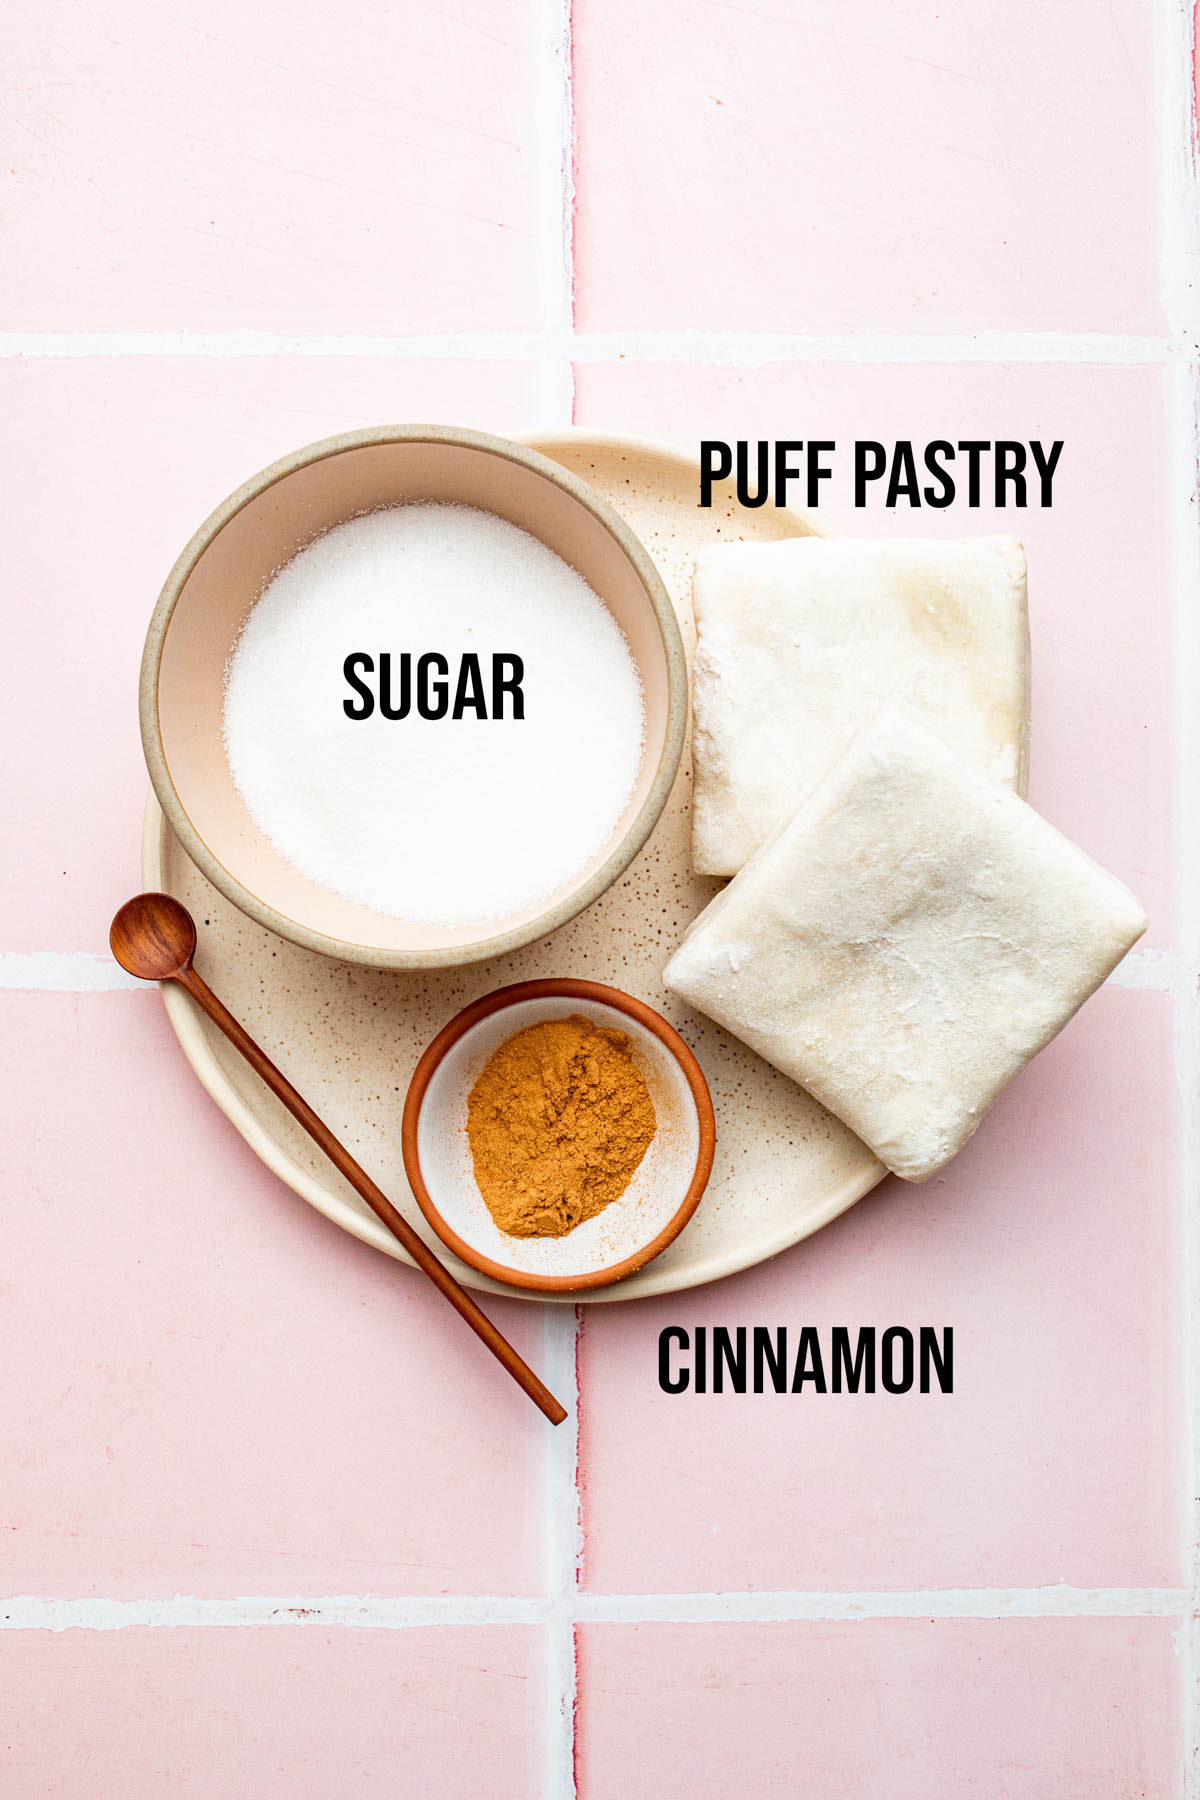 Puff pastry cinnamon twist ingredients.